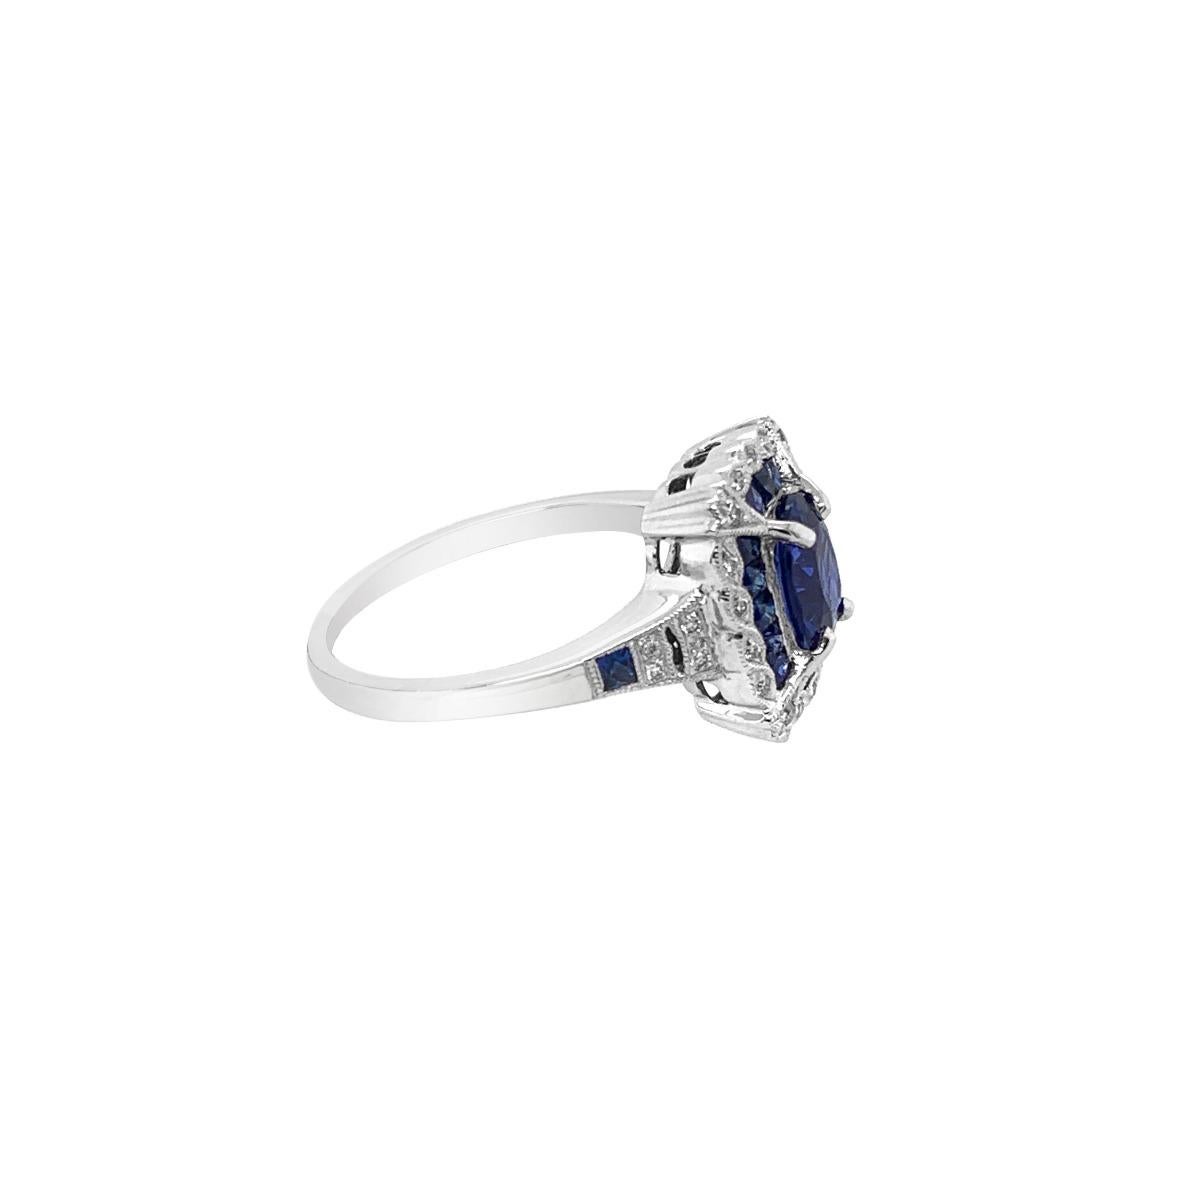 Metal: 18k White Gold
Hallmark: 18k bkc
Ring Size: 6.5
Gemstone: Sapphire, Diamond
Sapphire Weight: 1.80 CT
Diamond Weight: 0.10 CT
VR1475